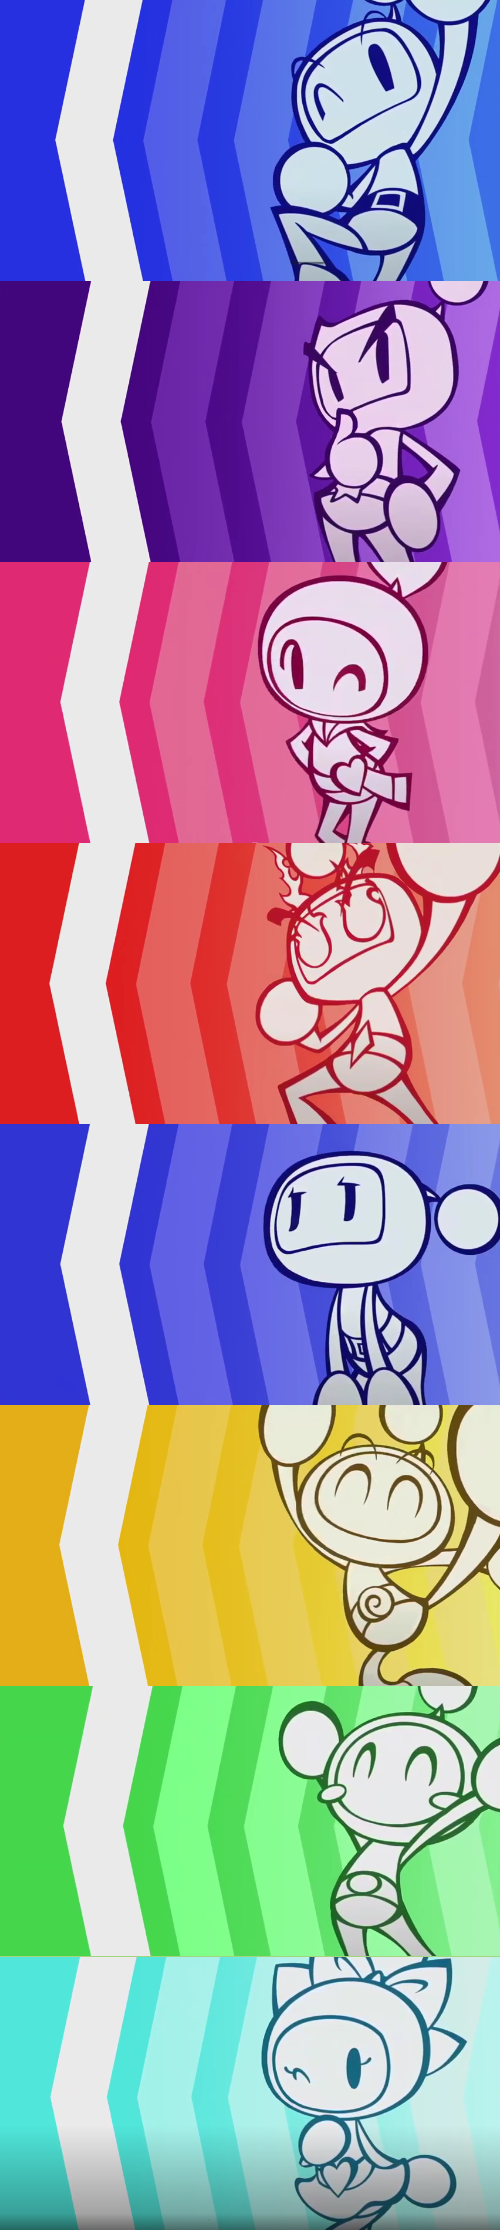 Super Bomberman R 2 loading screens (Original) (Updated) Blank Meme Template